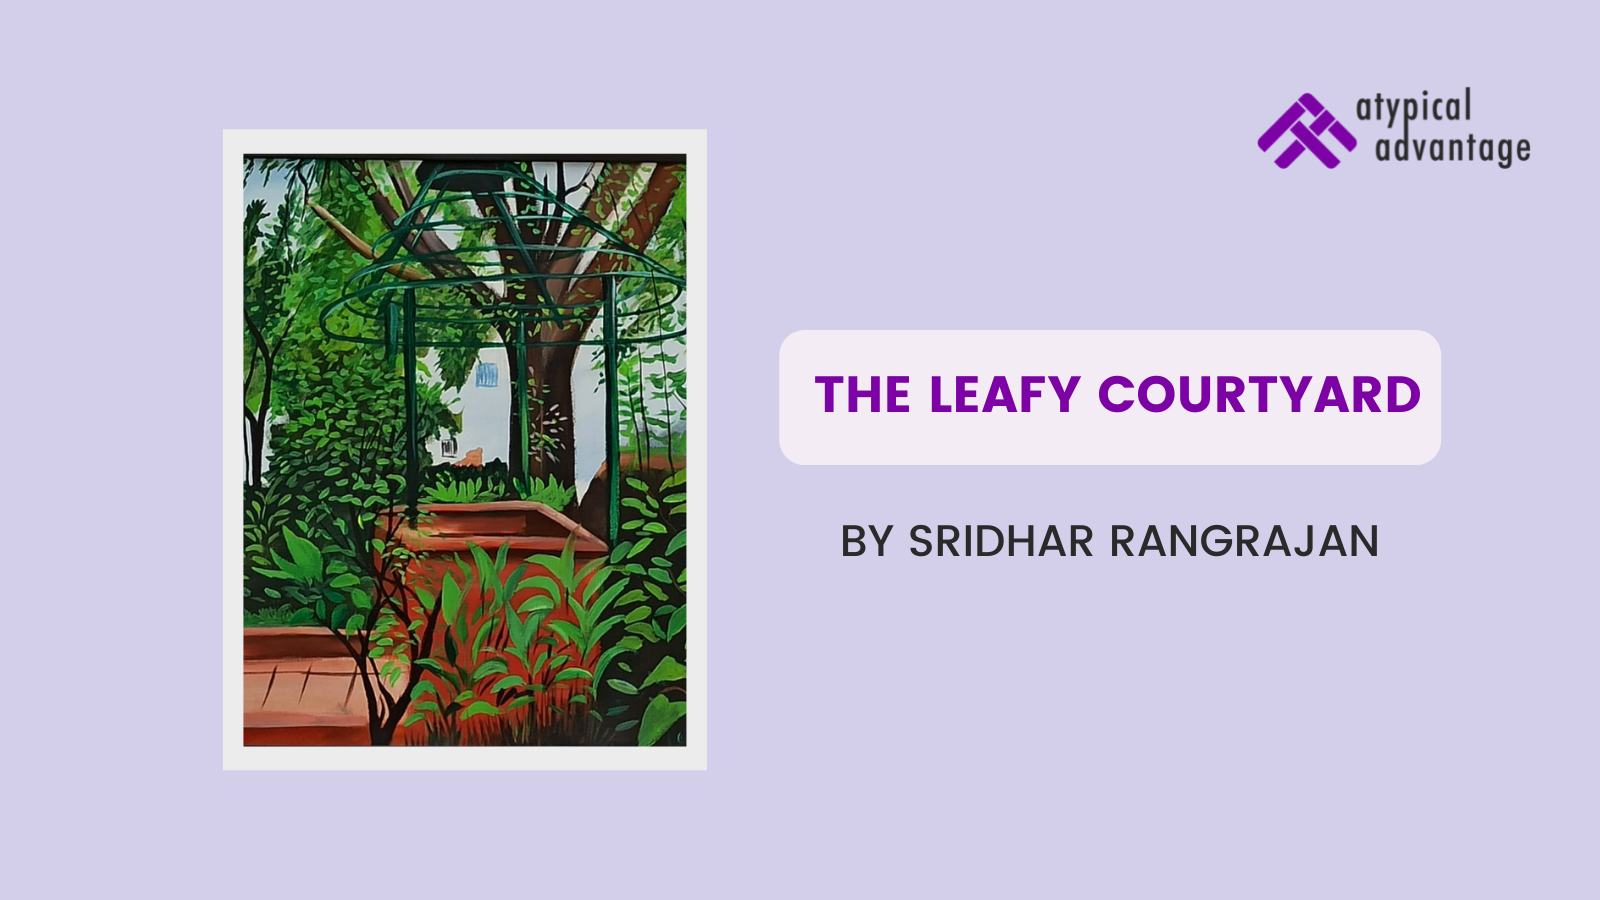 The Leafy Courtyard by Sridhar Rangrajan